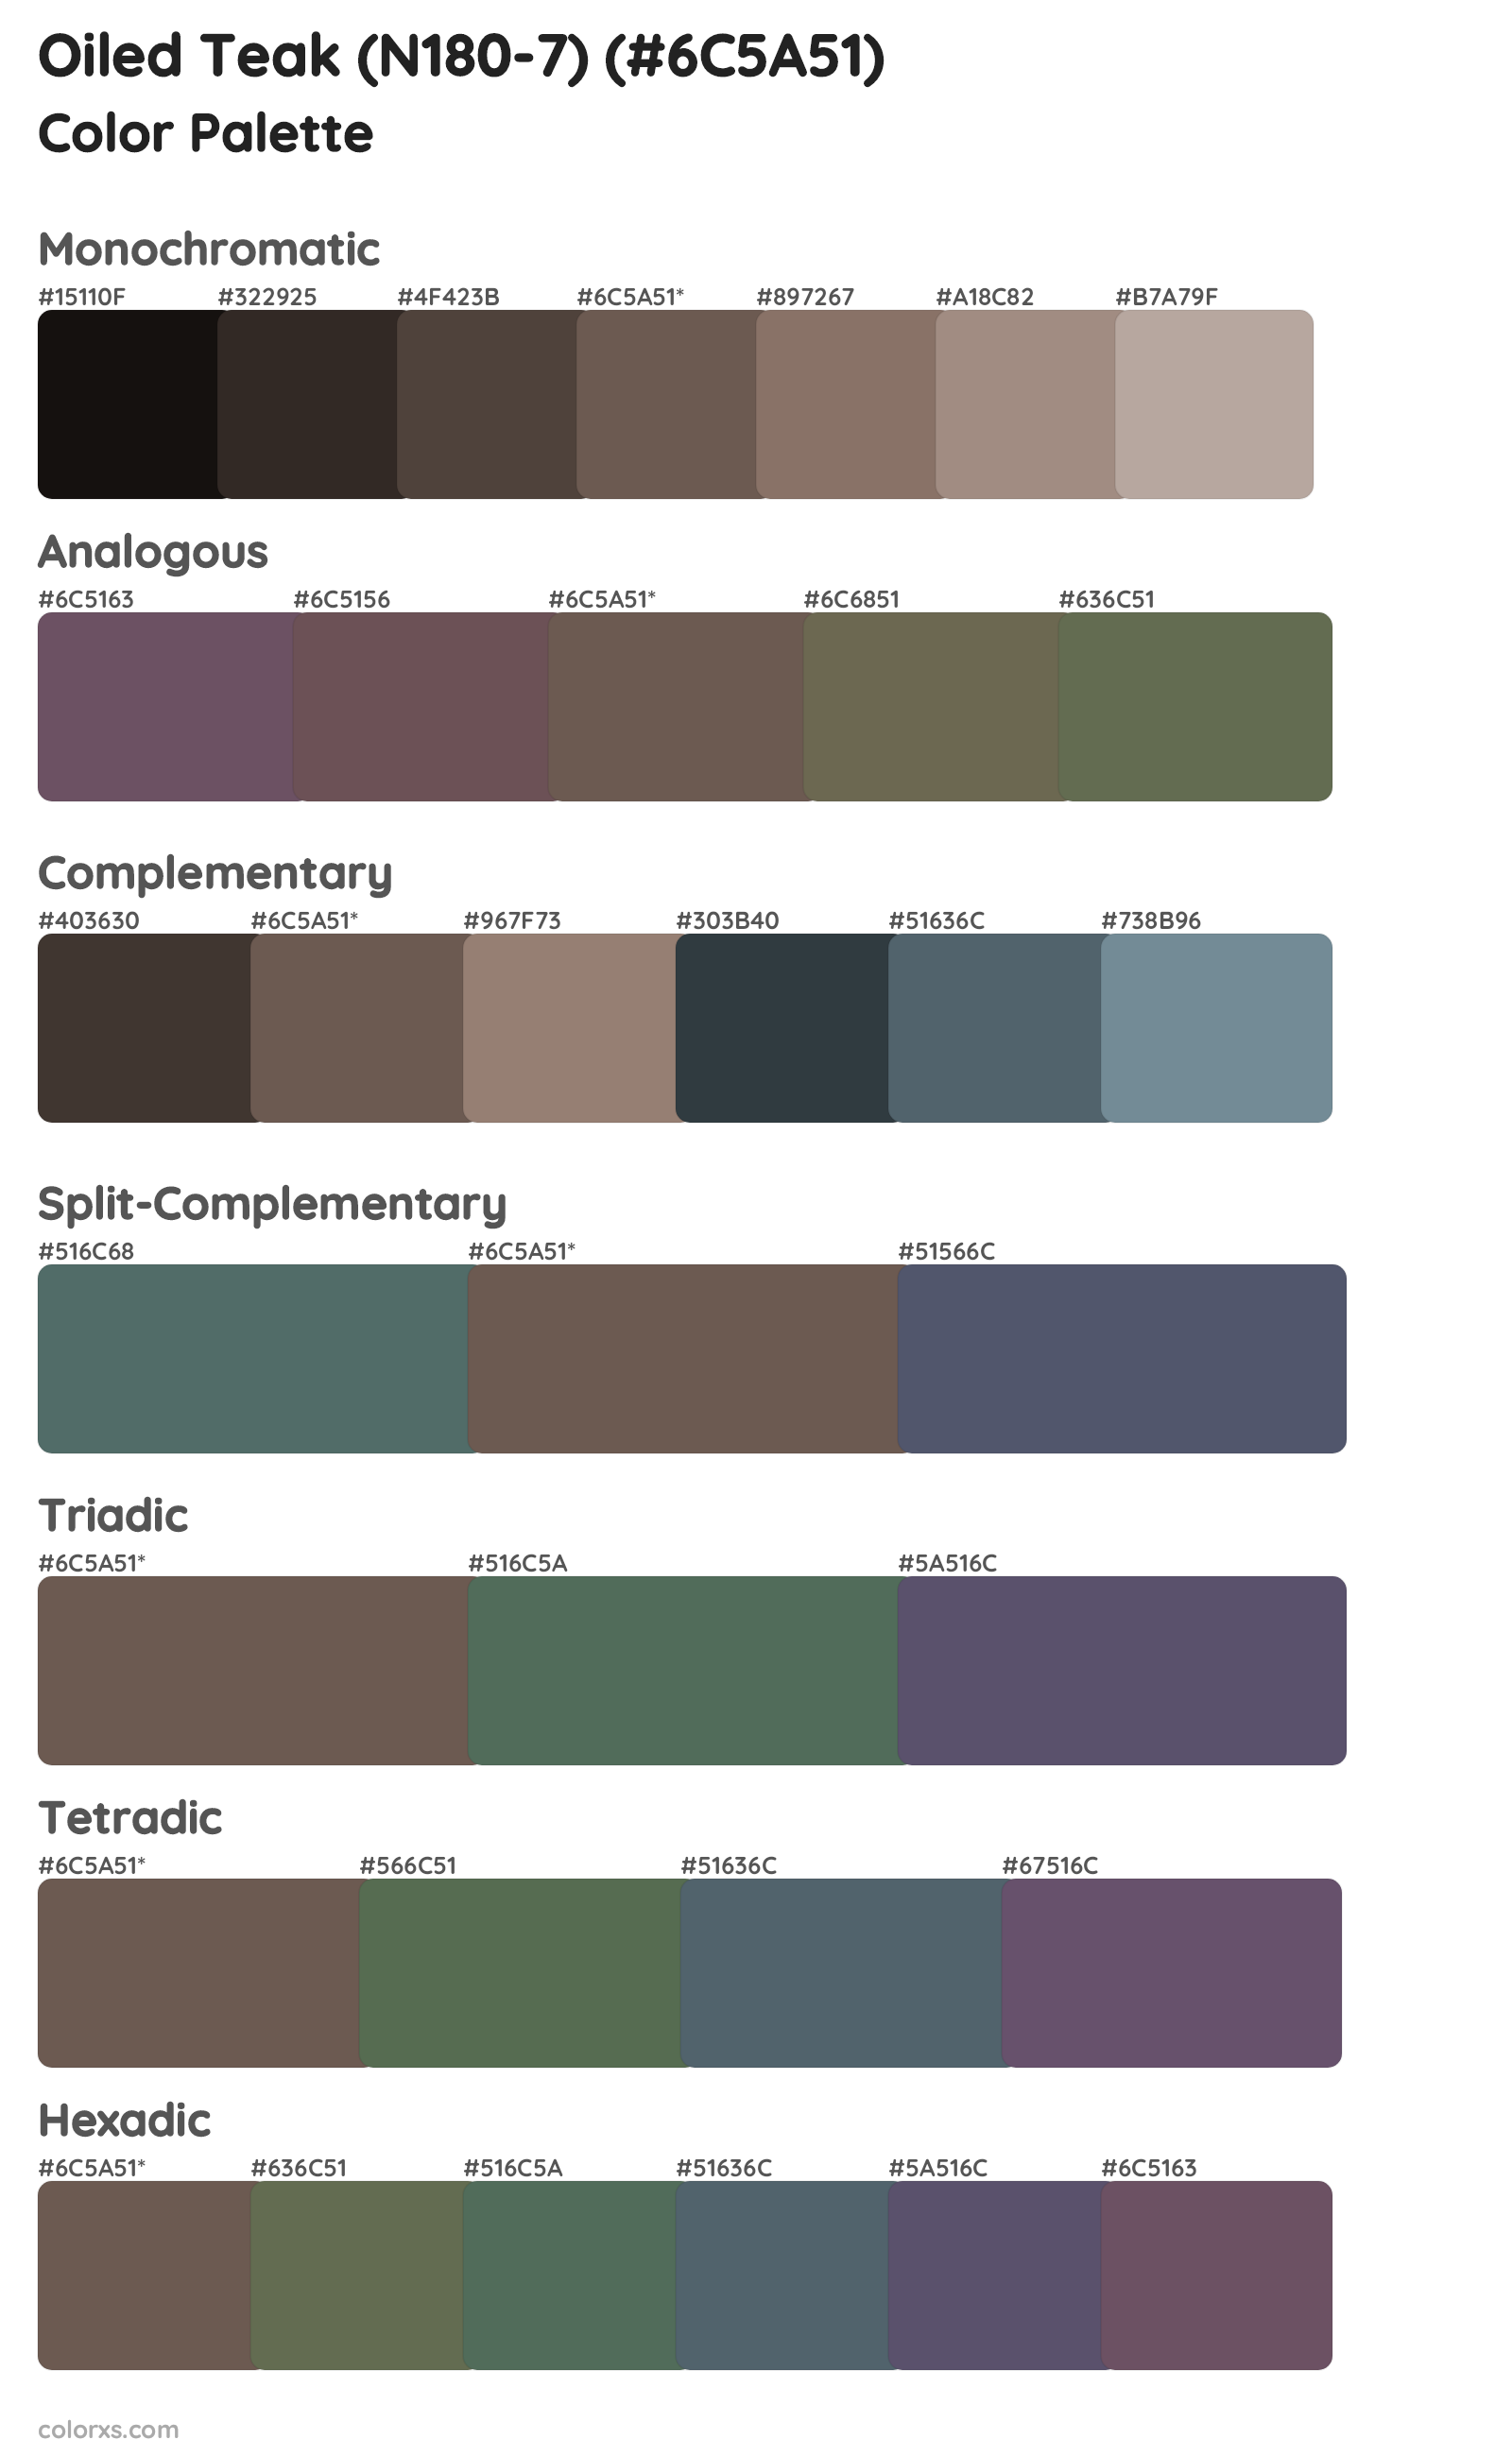 Oiled Teak (N180-7) Color Scheme Palettes